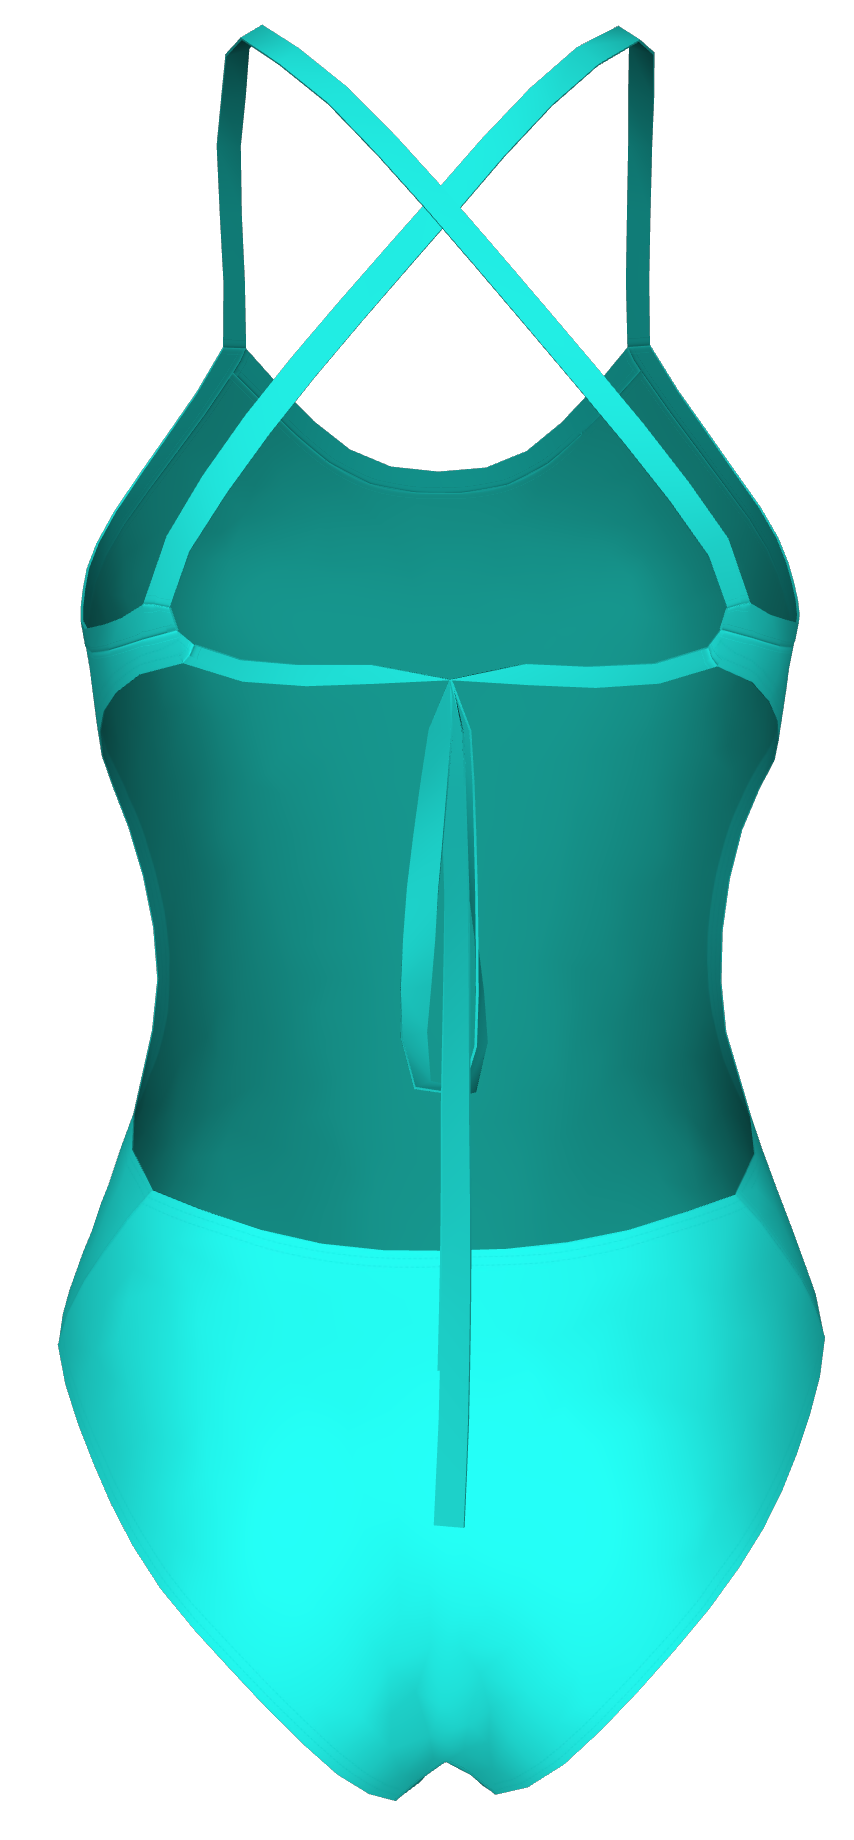 Aqua Blue swimsuit 